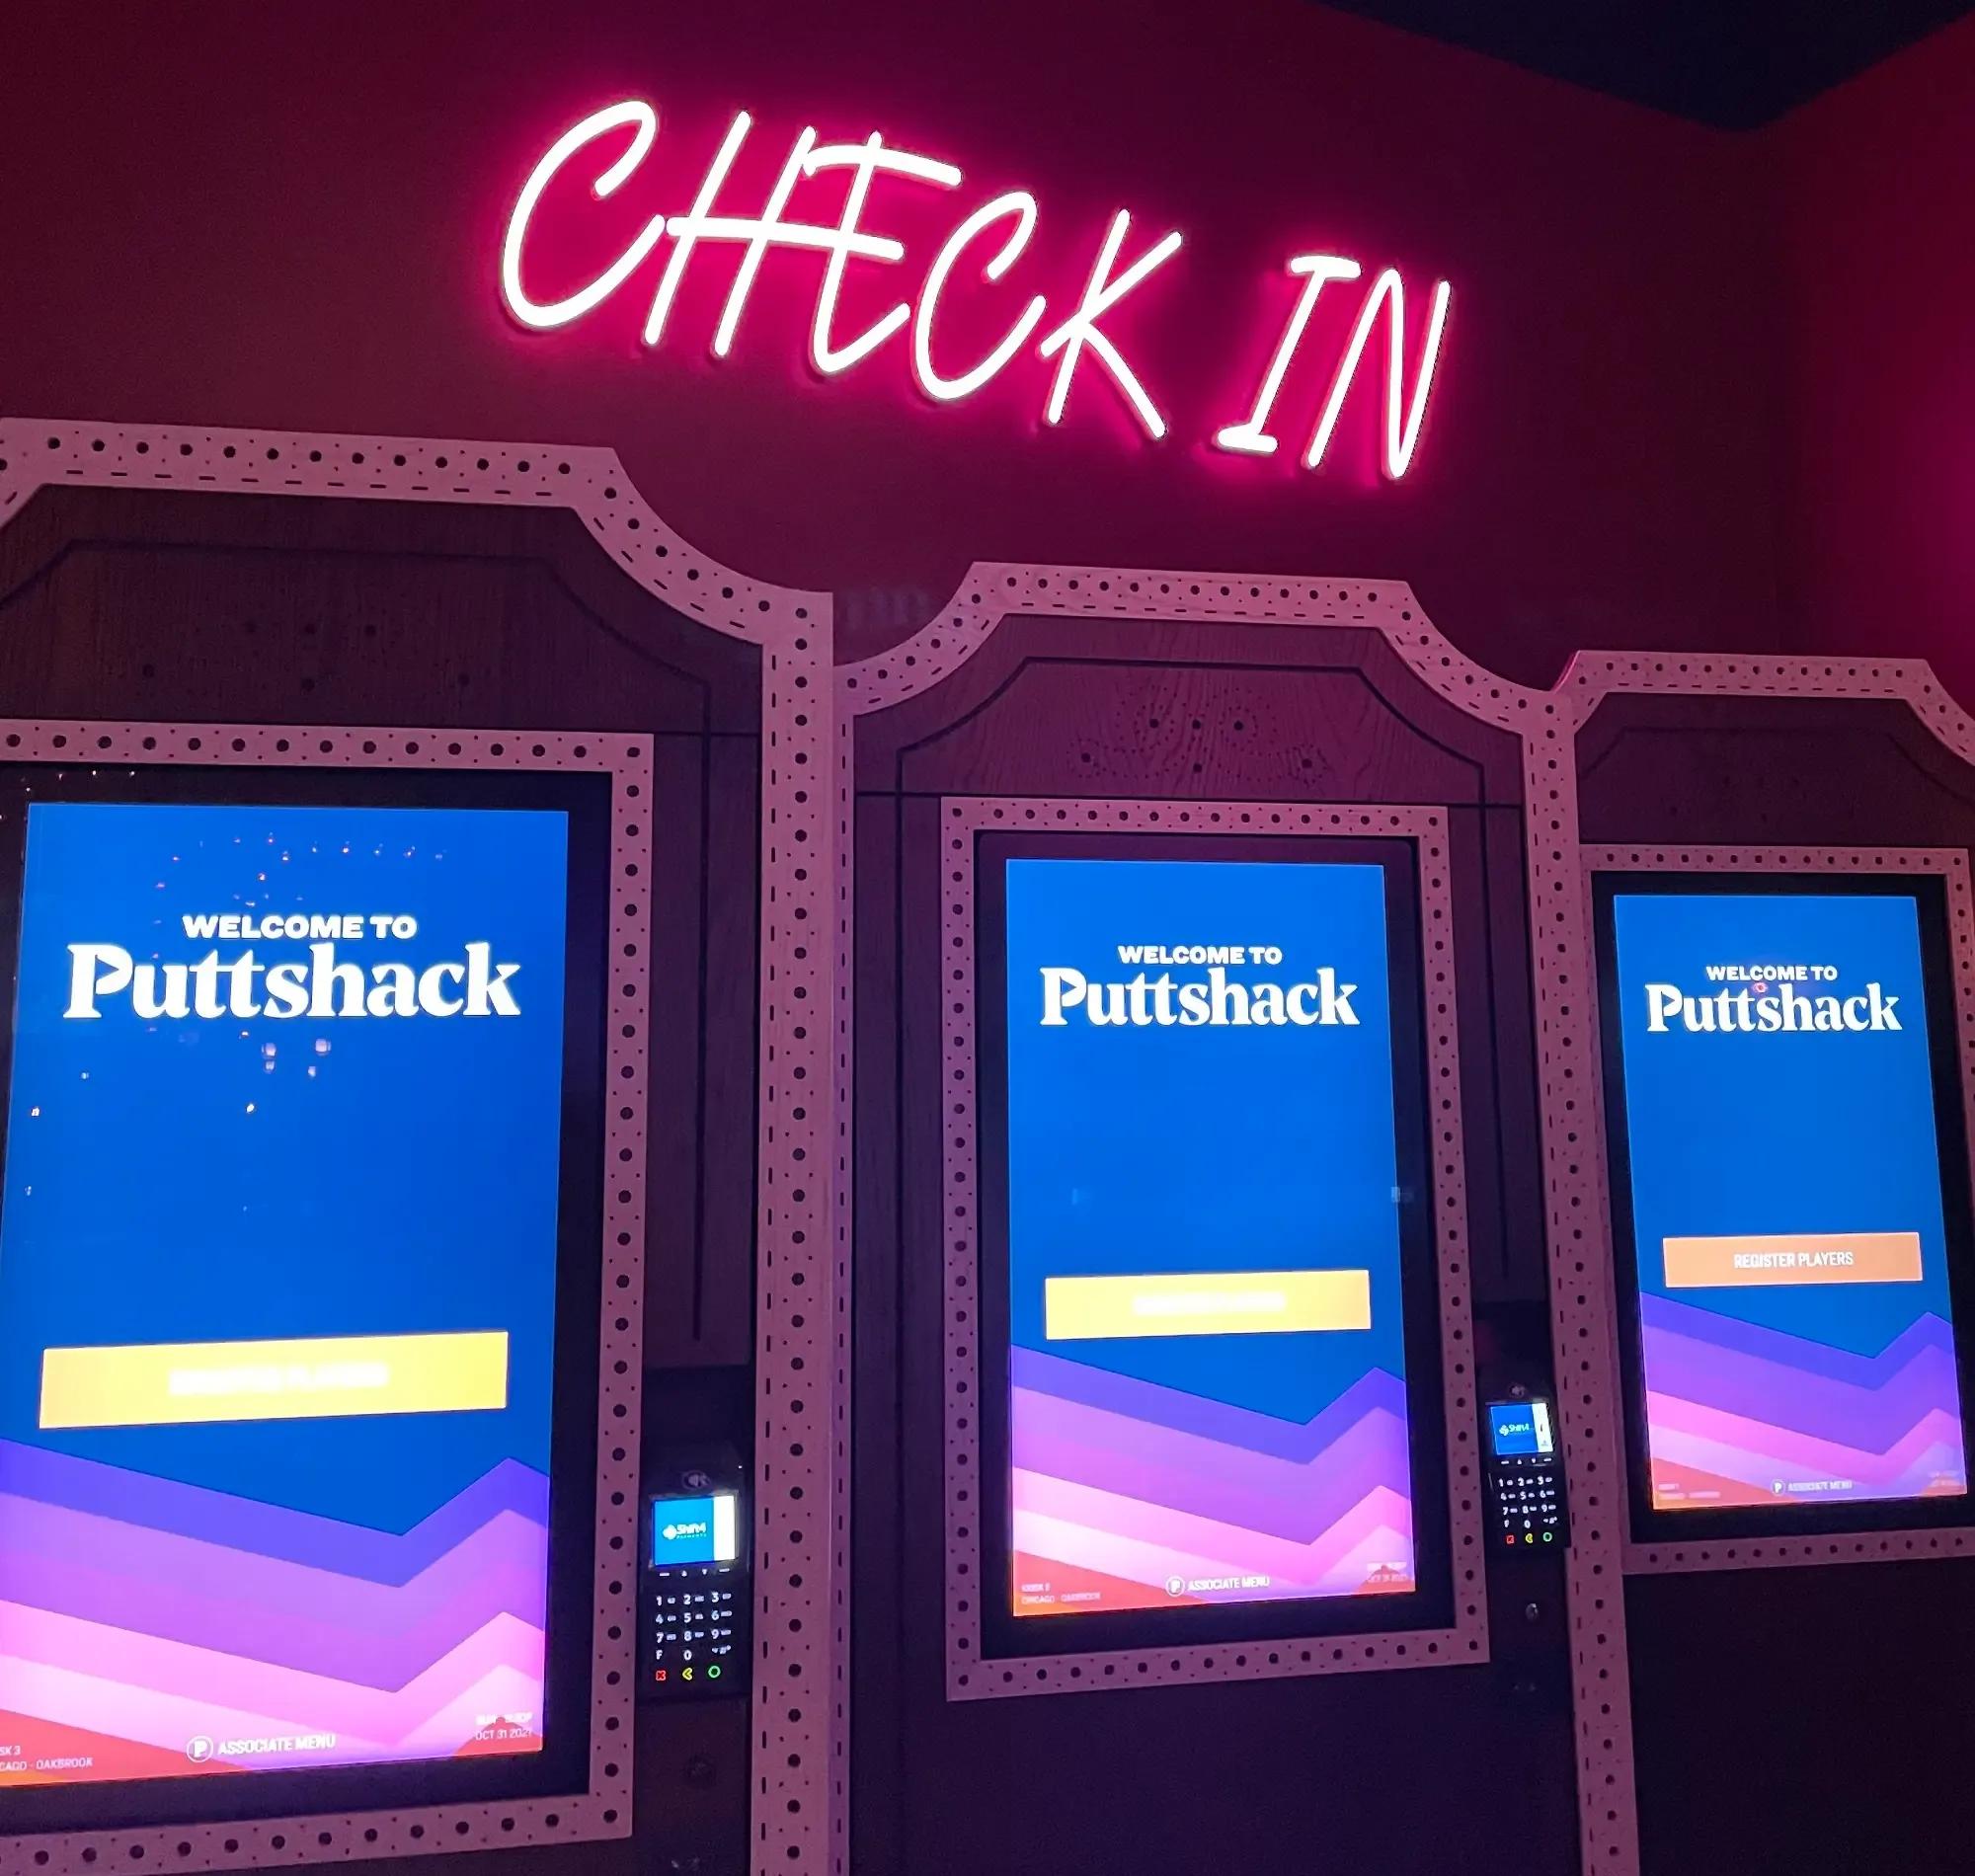 Puttshack Check In Kiosks